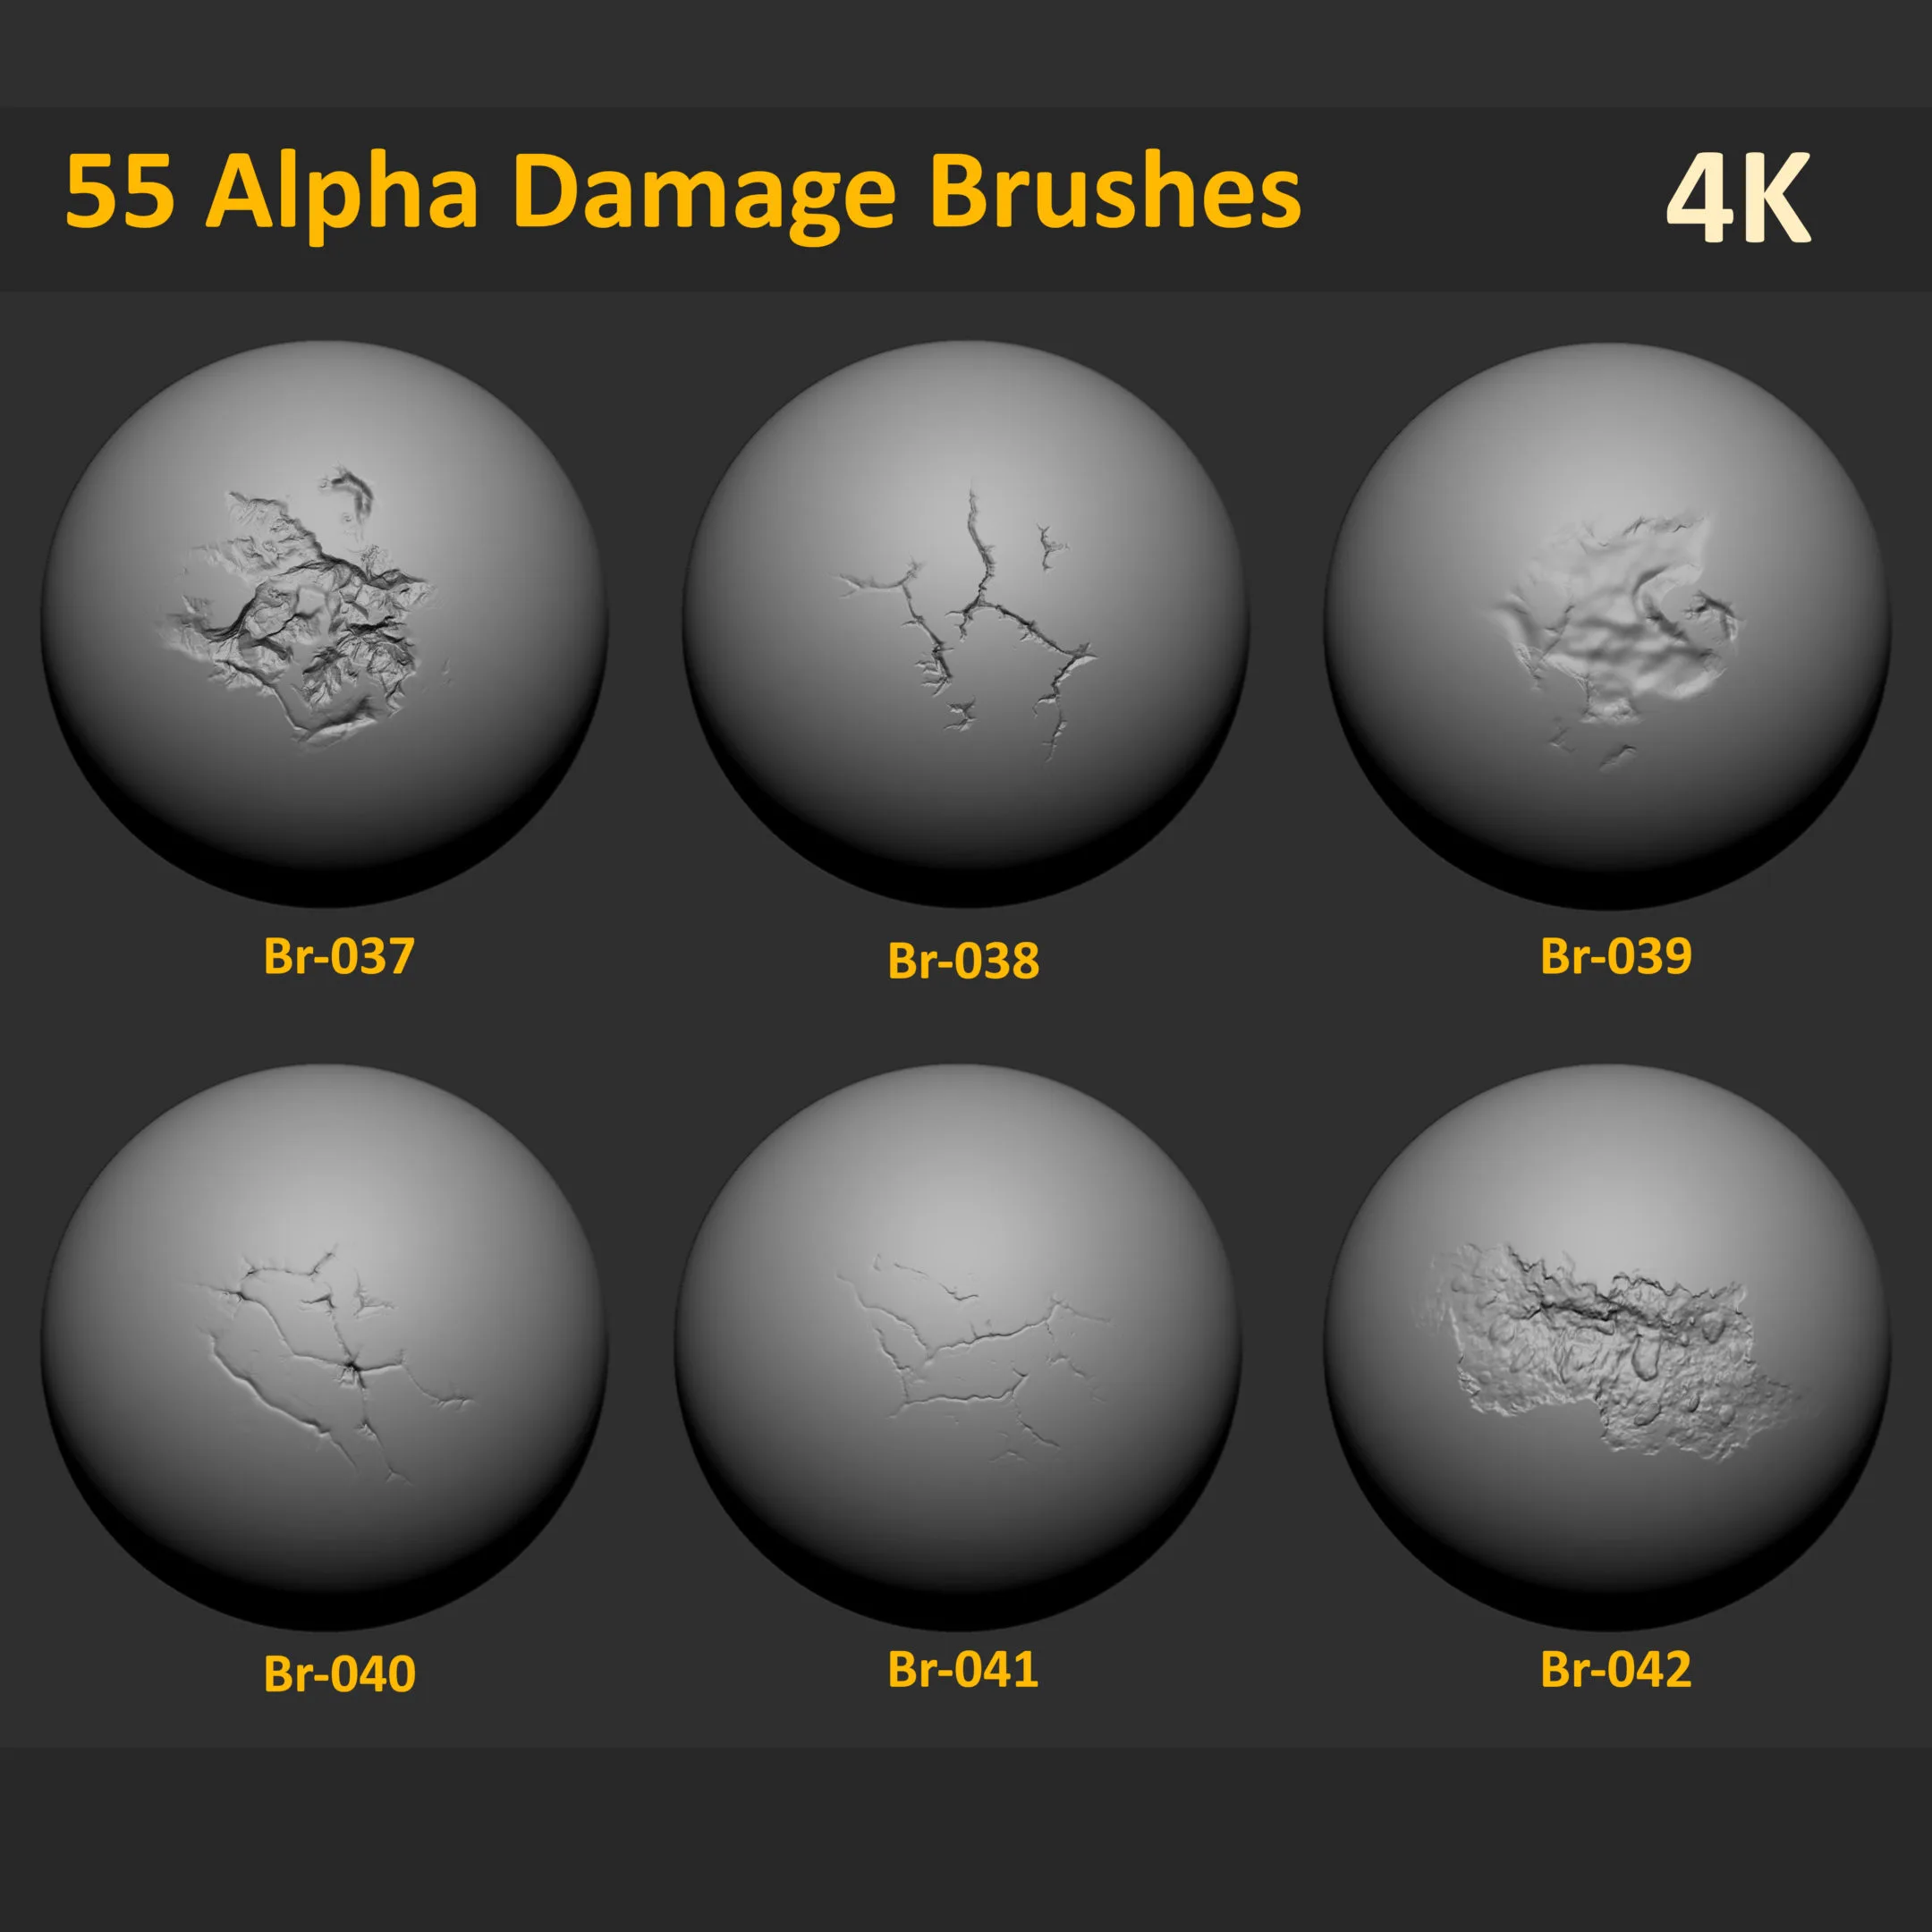 55 Zbrush Stone and Concrete Damage Brushes + Video Tutorial